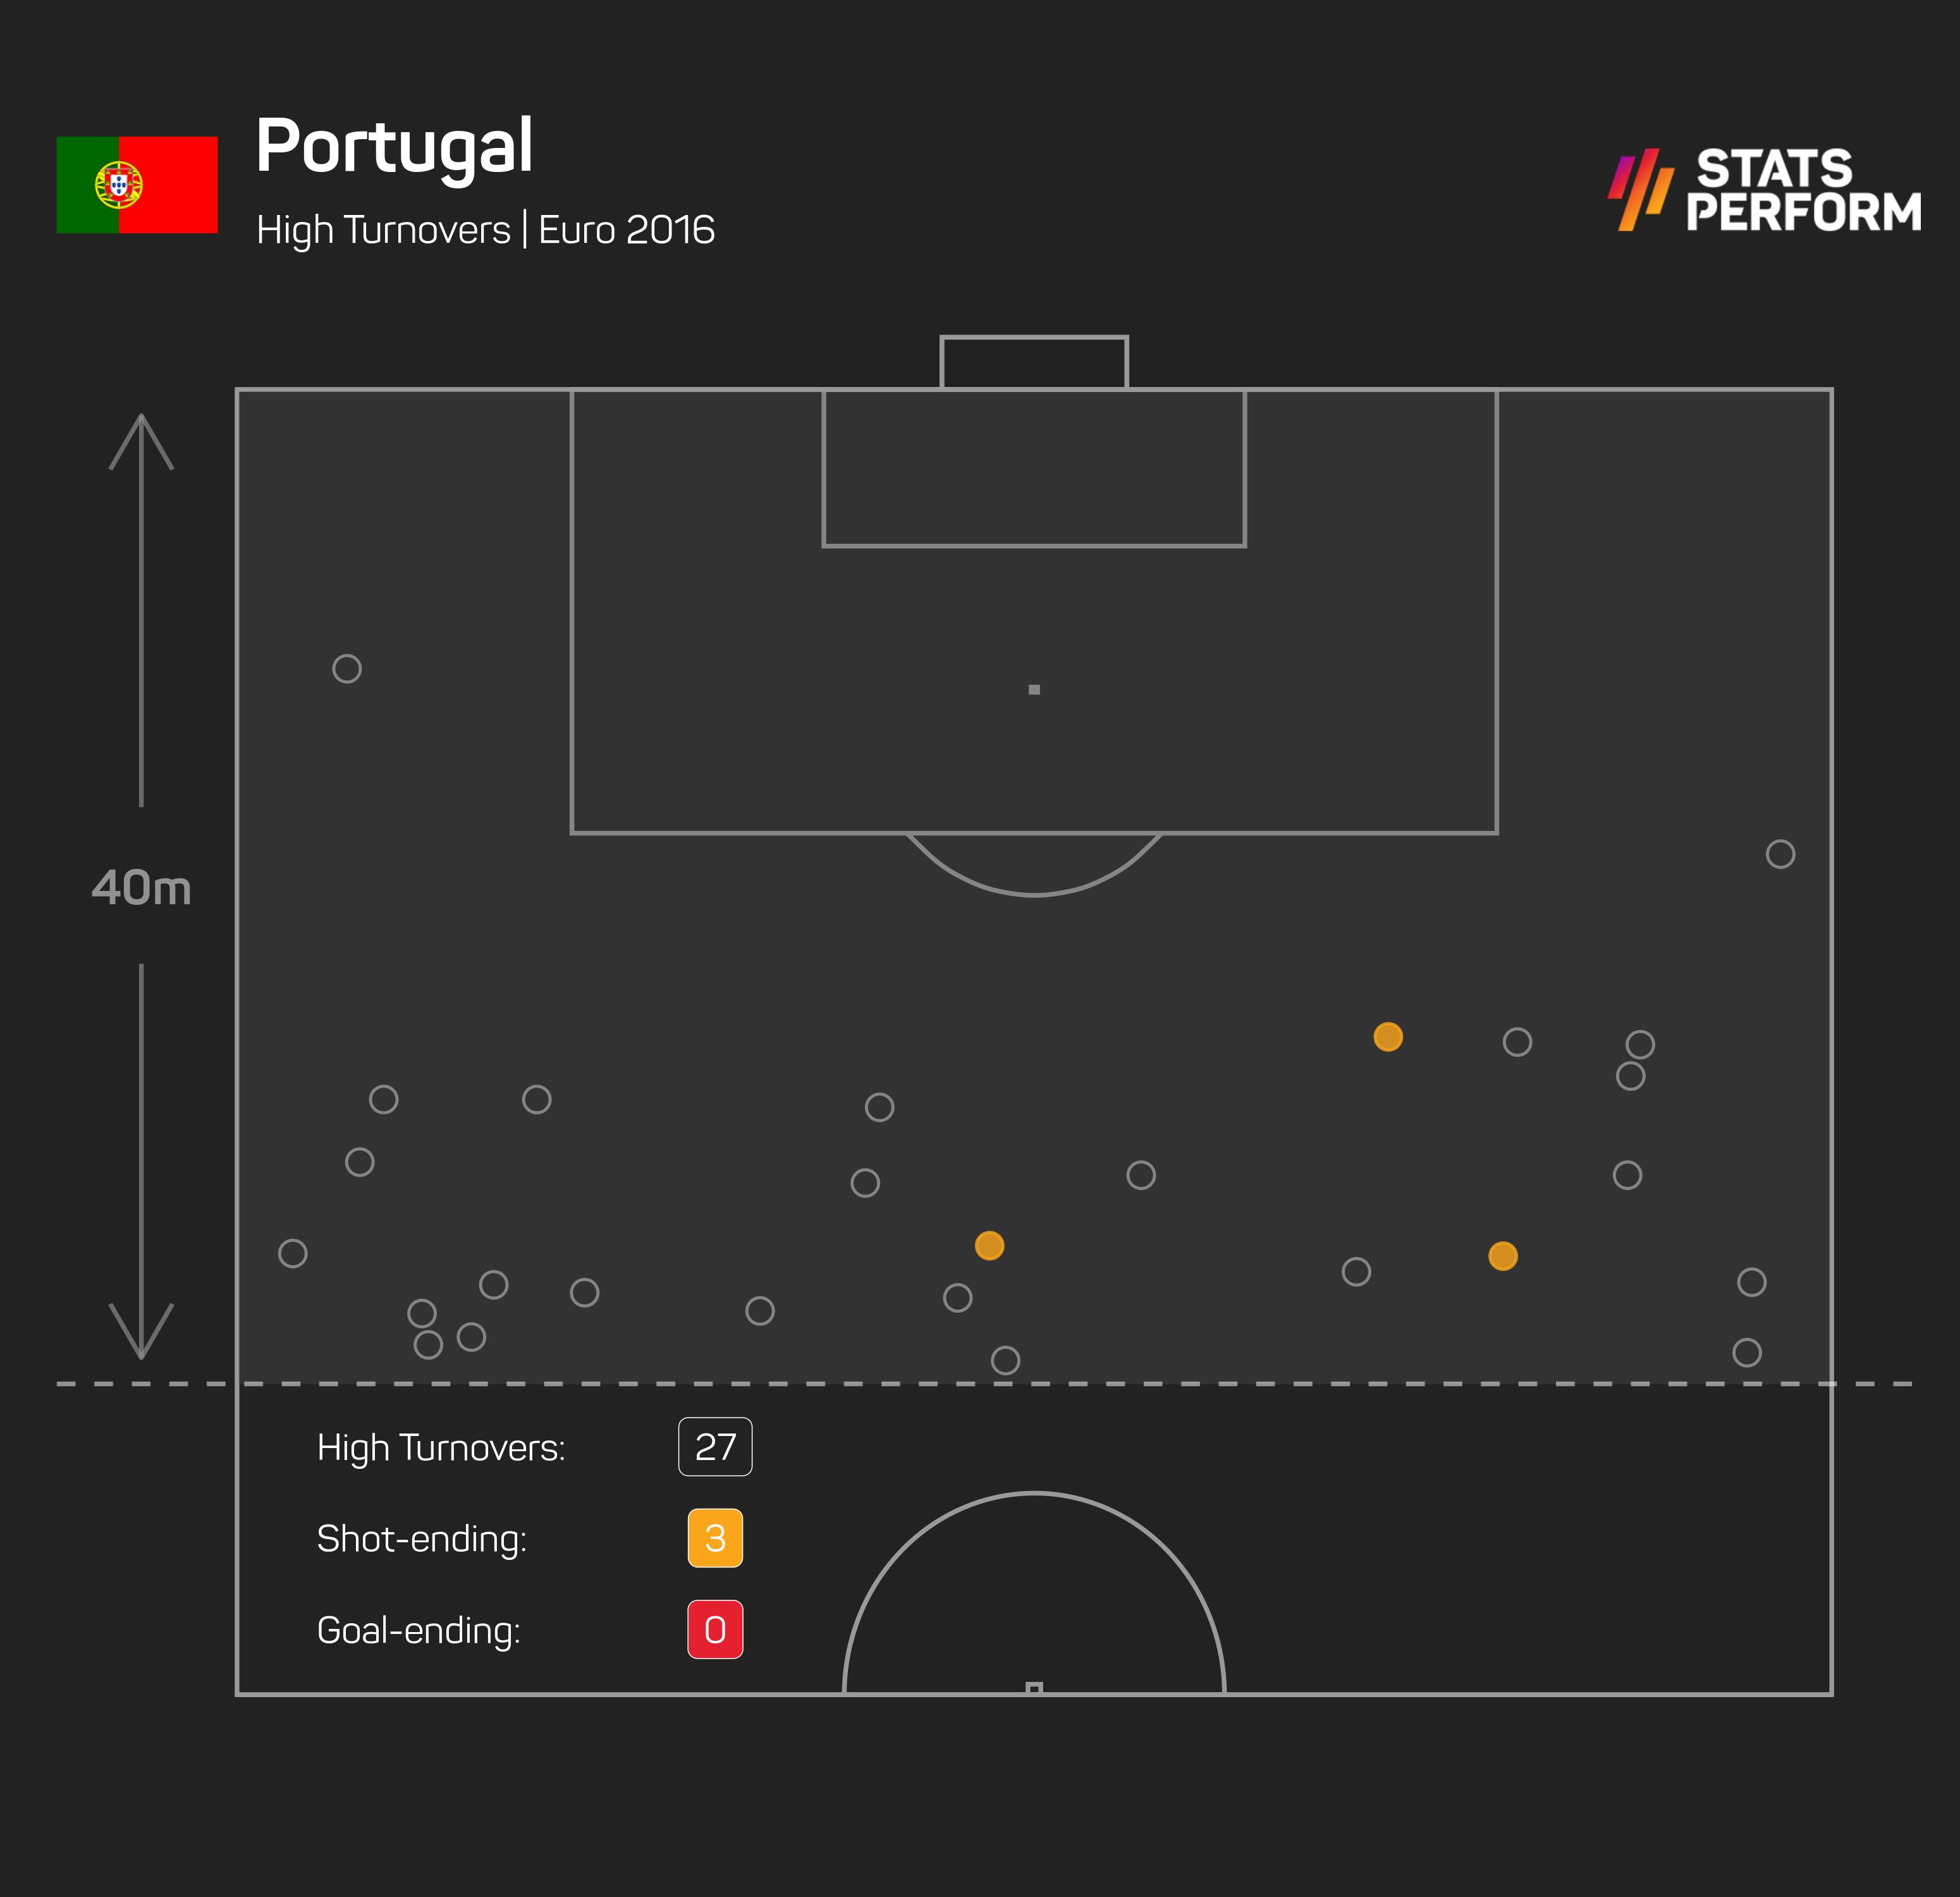 Portugal high turnovers Euro 2016